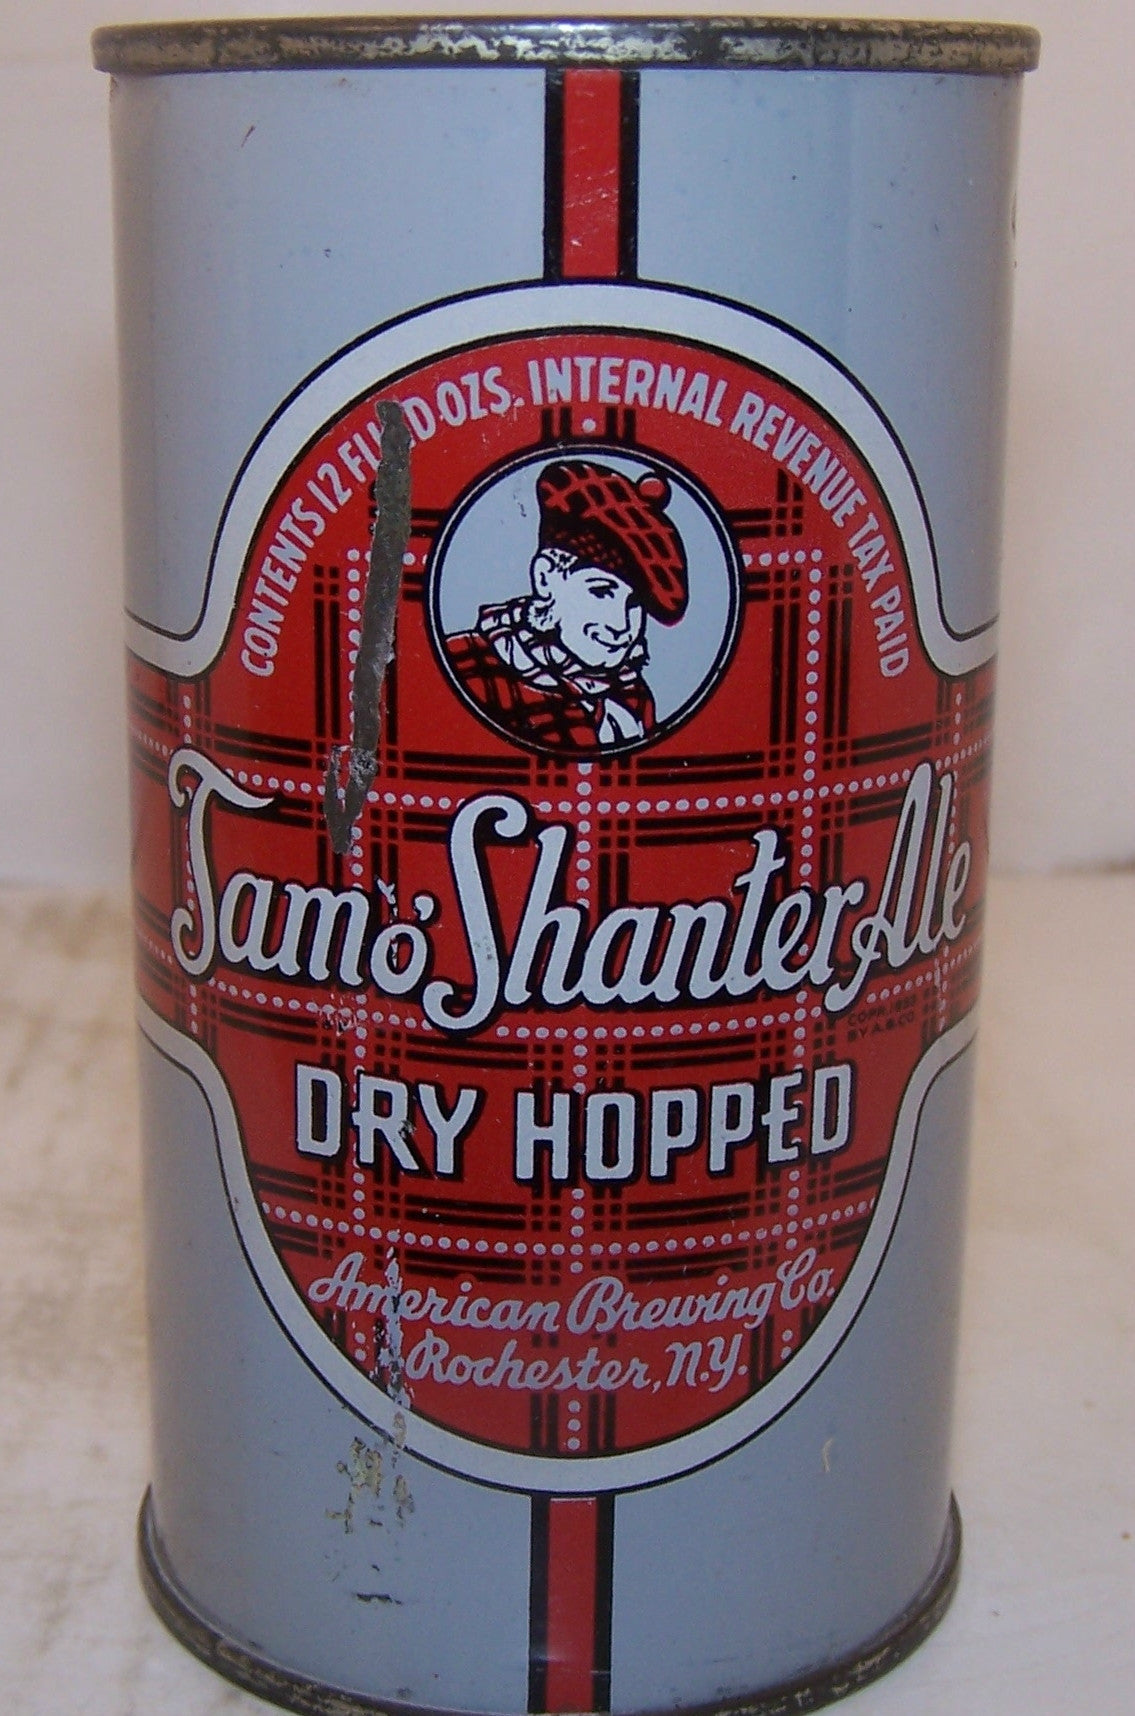 Tamo' Shanter Ale, (Dull Gray) Lilek page # 784, Grade 1- Sold on 3/2/15